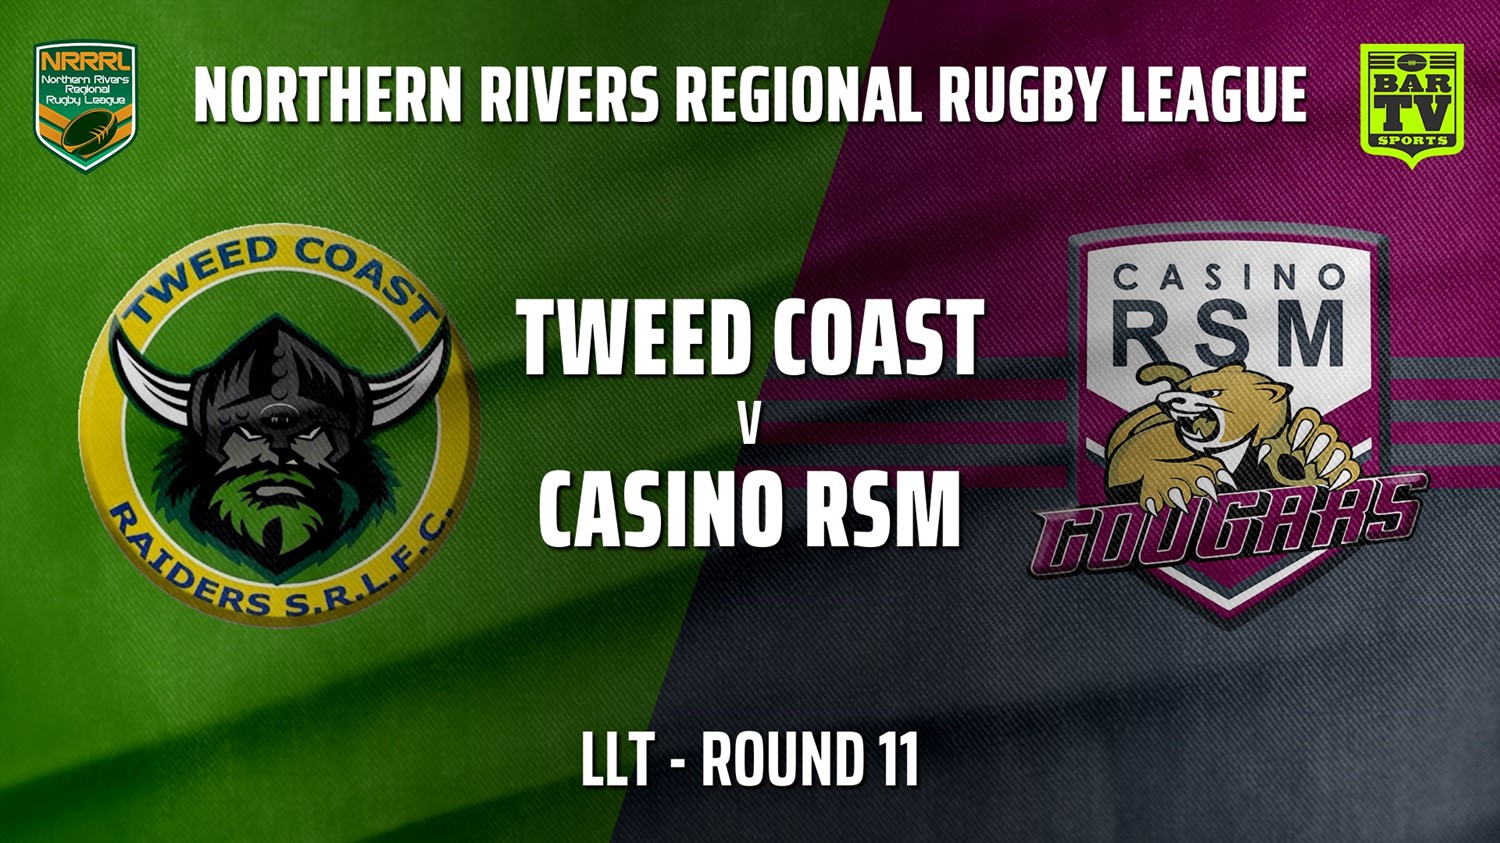 210718-Northern Rivers Round 11 - LLT - Tweed Coast Raiders v Casino RSM Cougars Slate Image